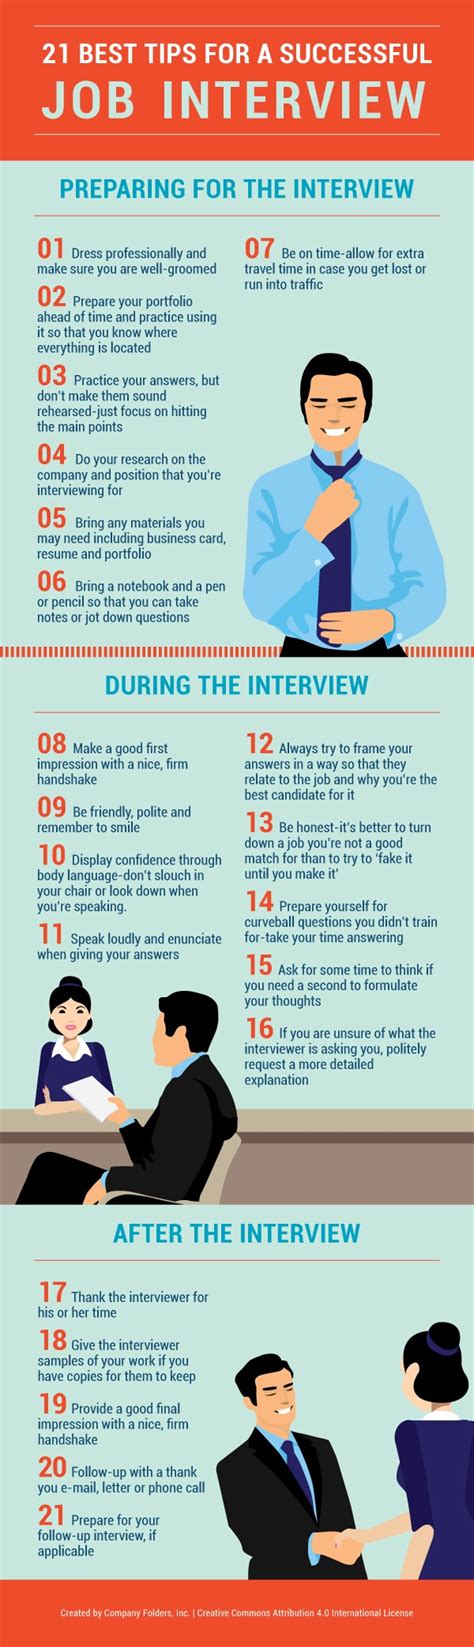 The best ways to improve your job interview skills